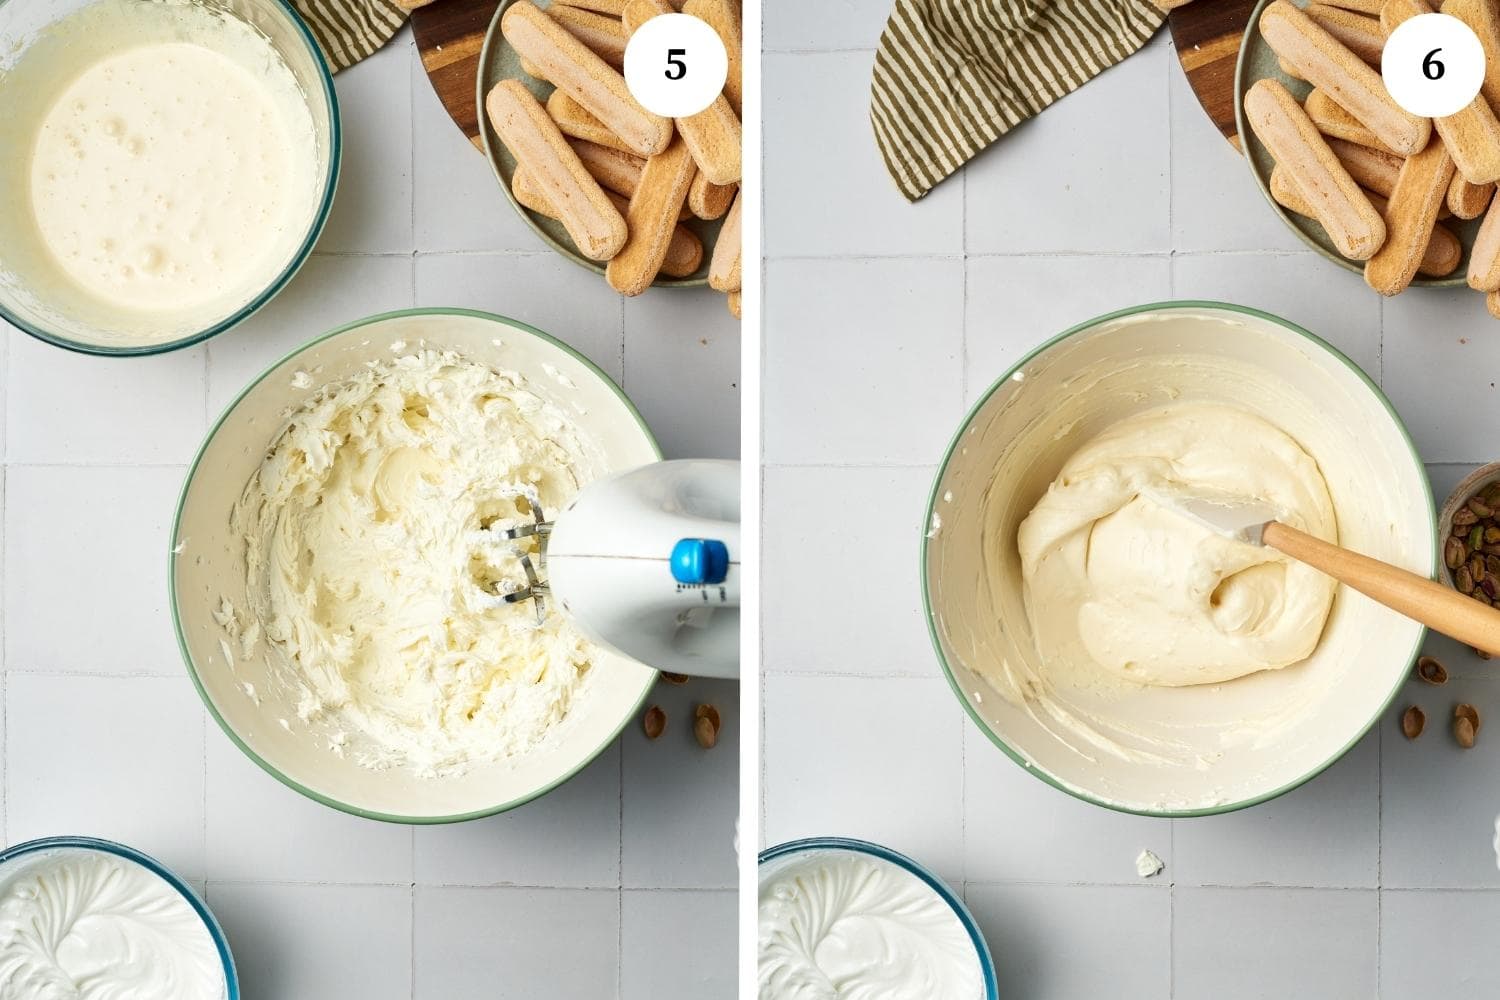 pistachio tiramisu procedure: whipped mascarpone cheese in a large bowl.